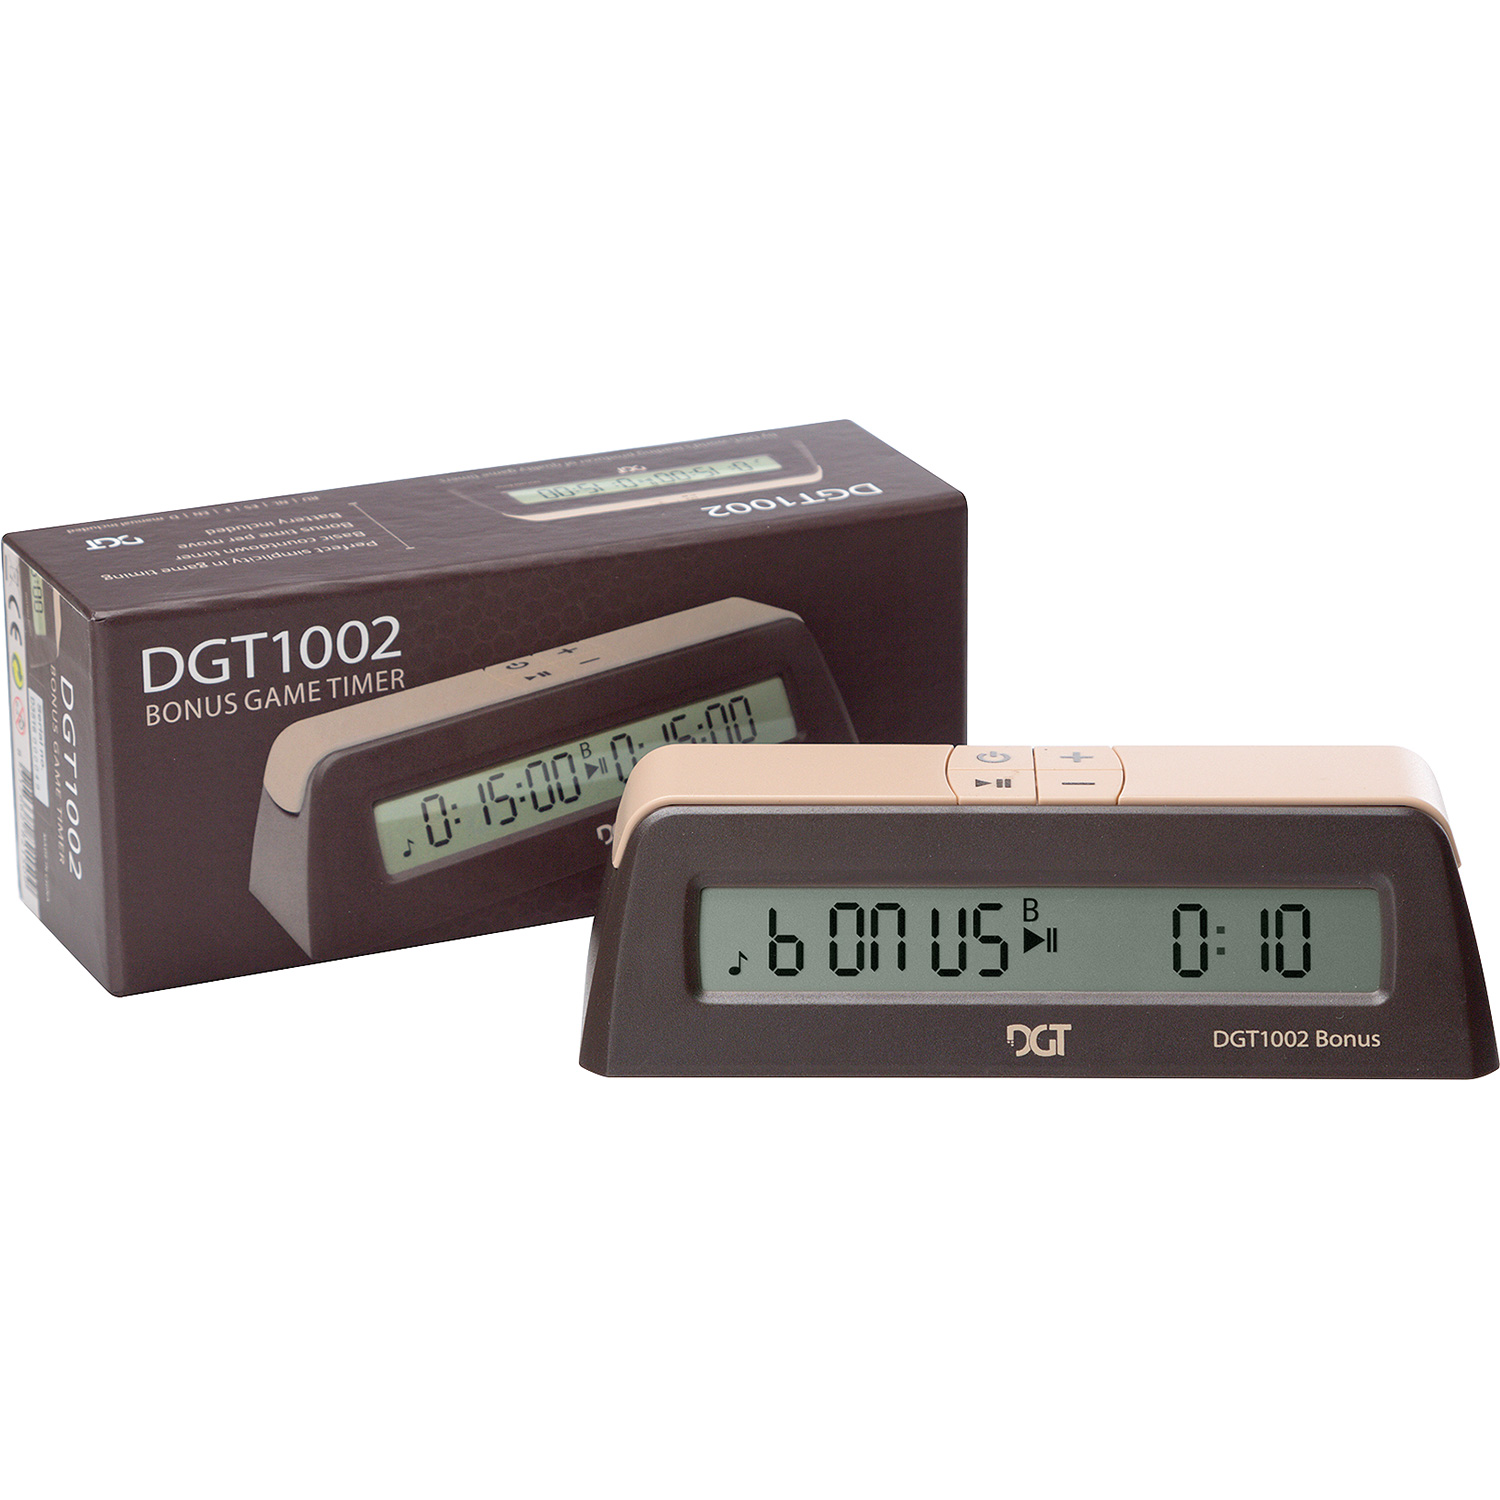 DGT 1002 digital chess clock bonus timer